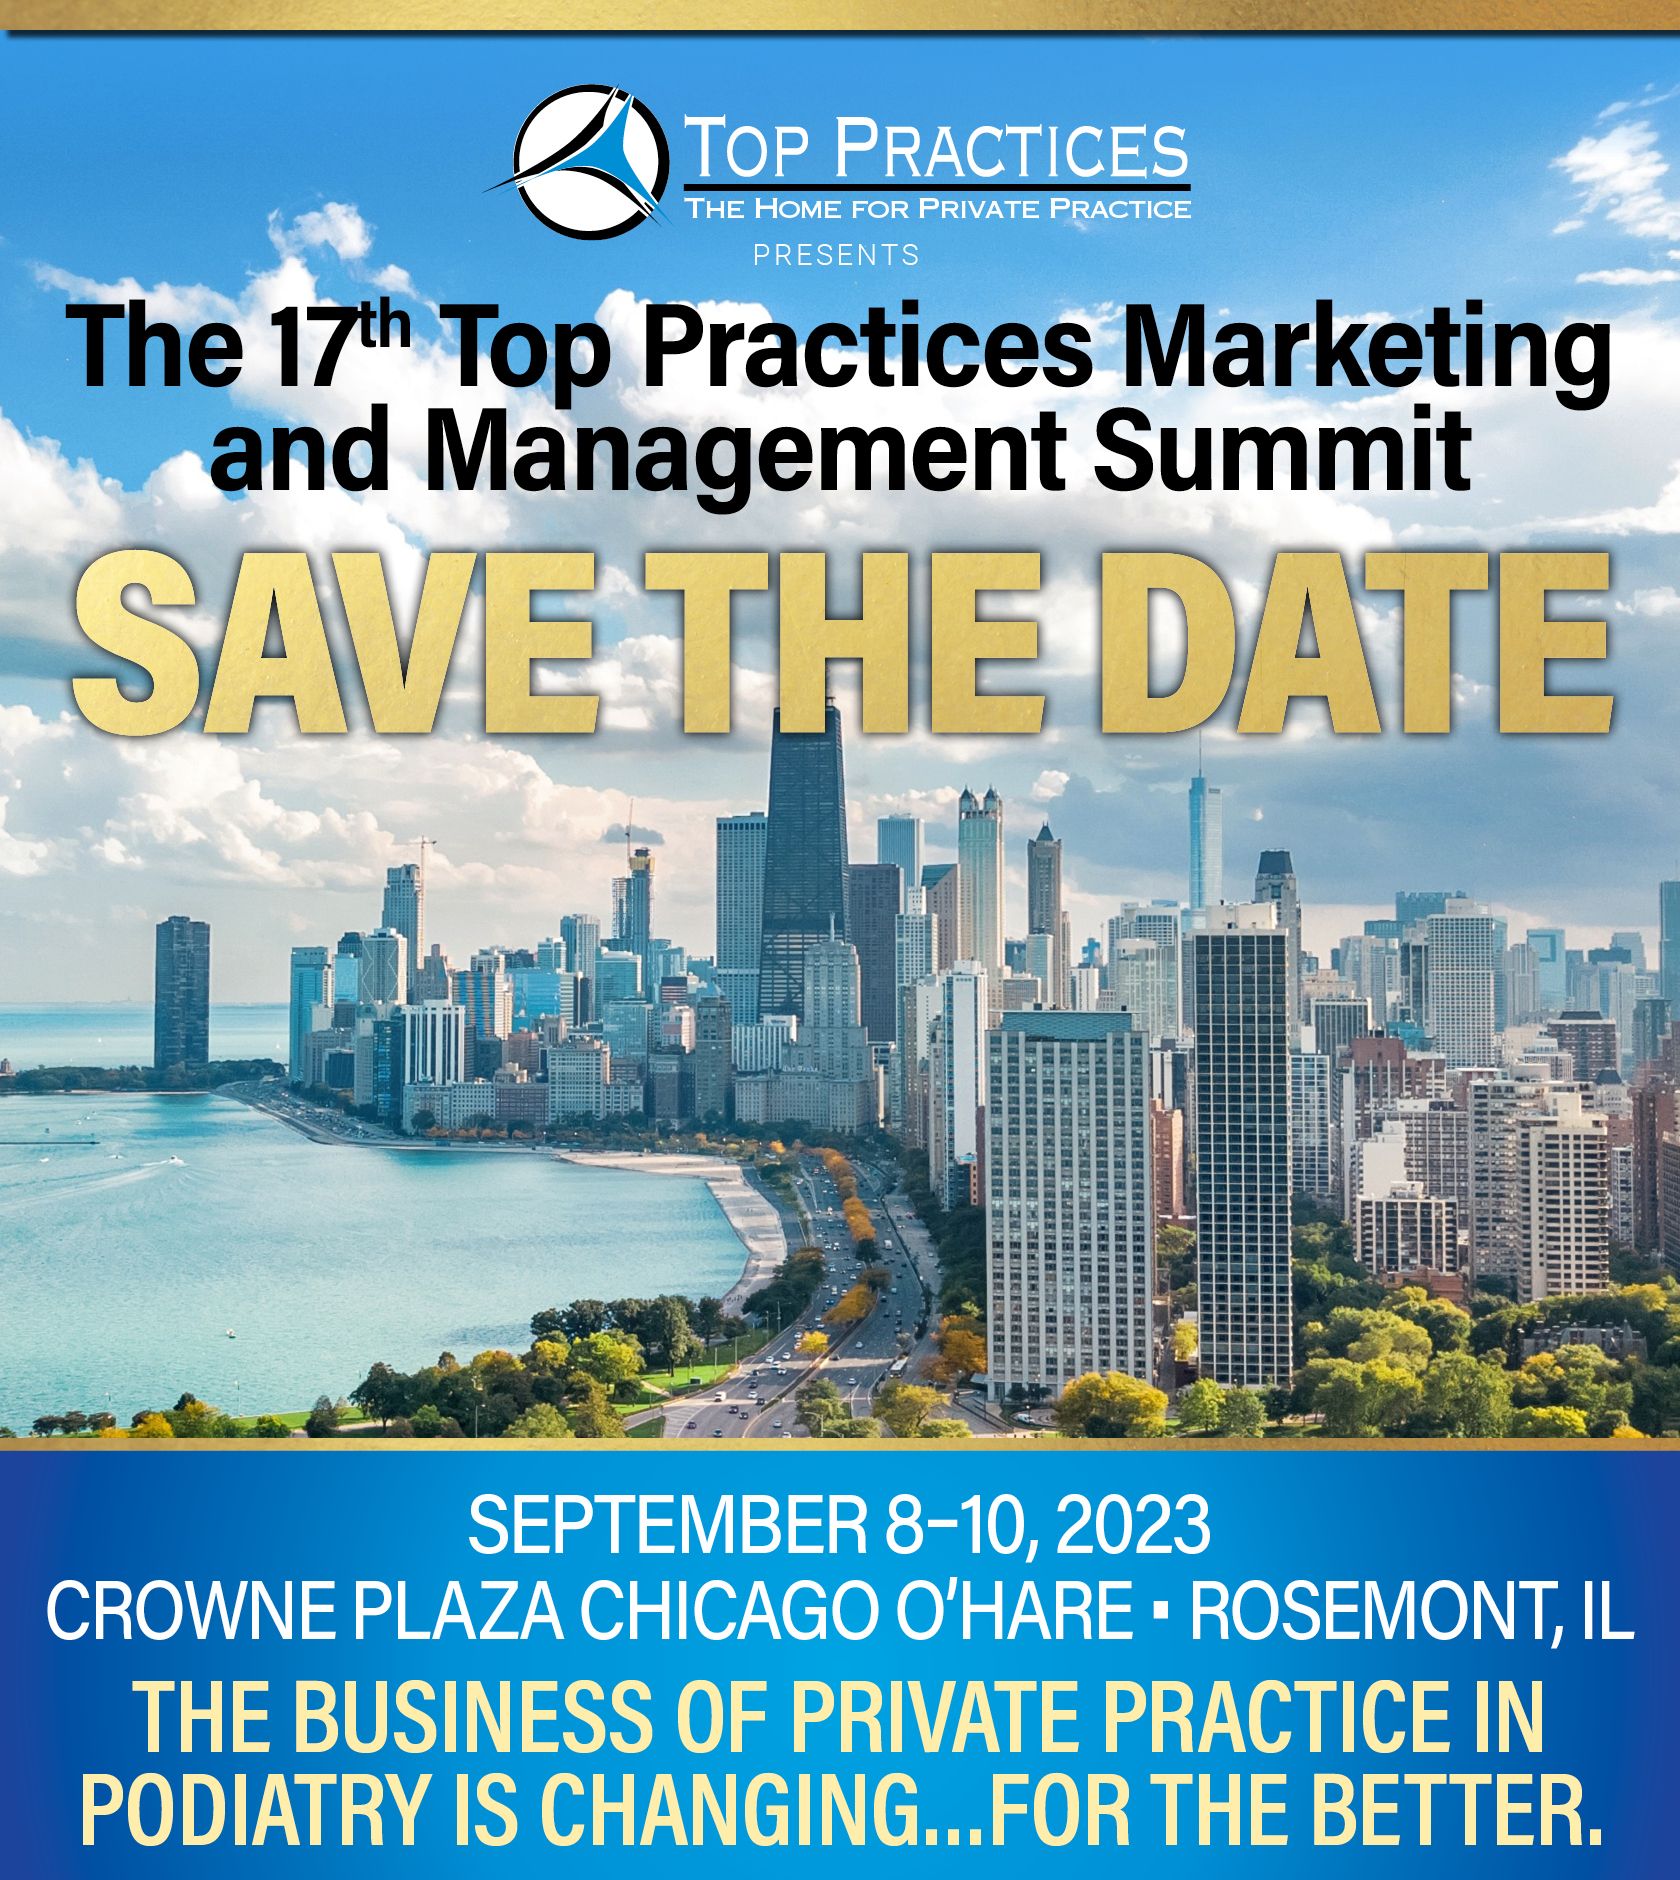 Top Practices Marketing Summit